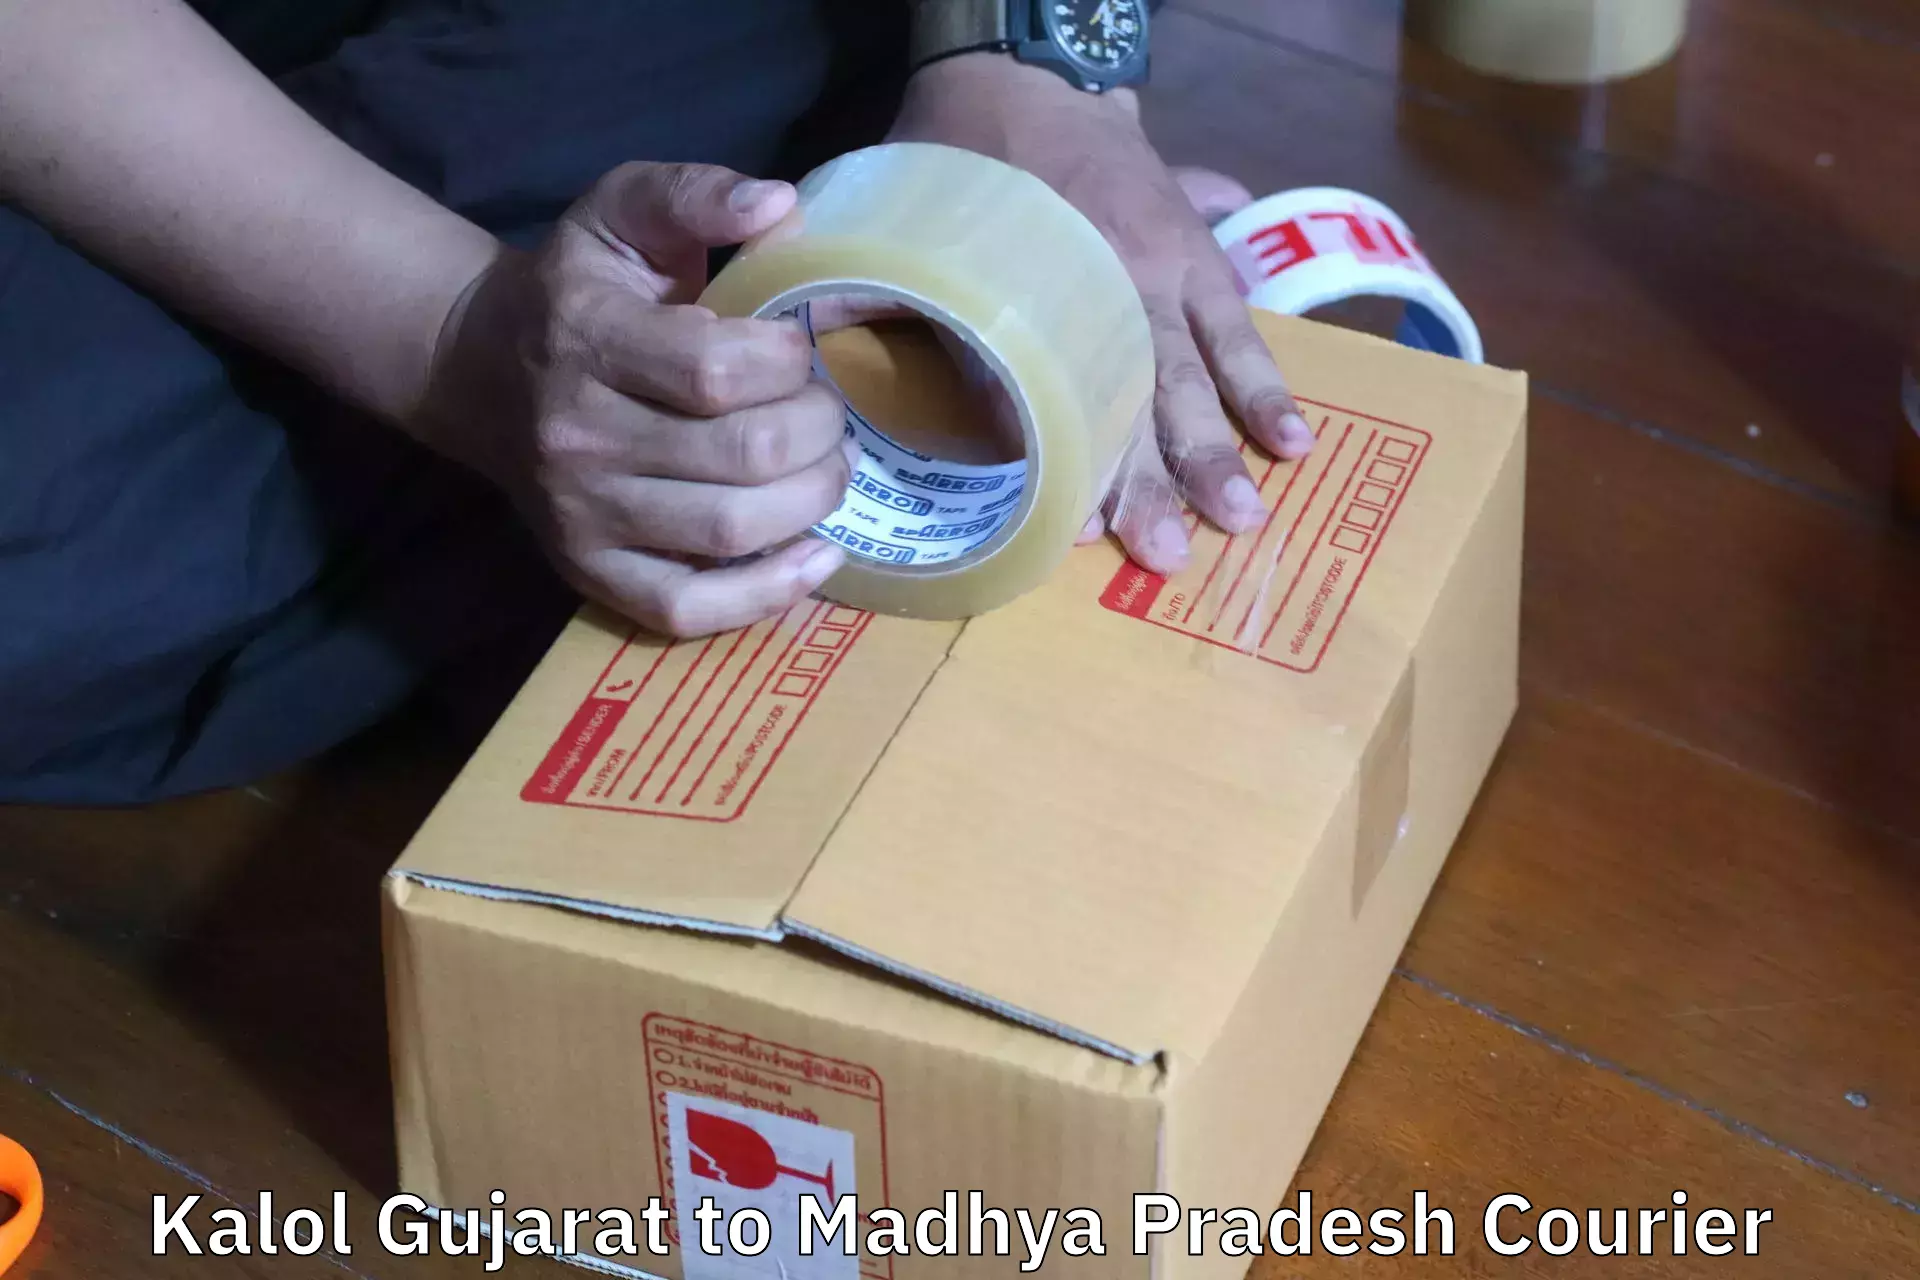 Specialized moving company Kalol Gujarat to Madhya Pradesh